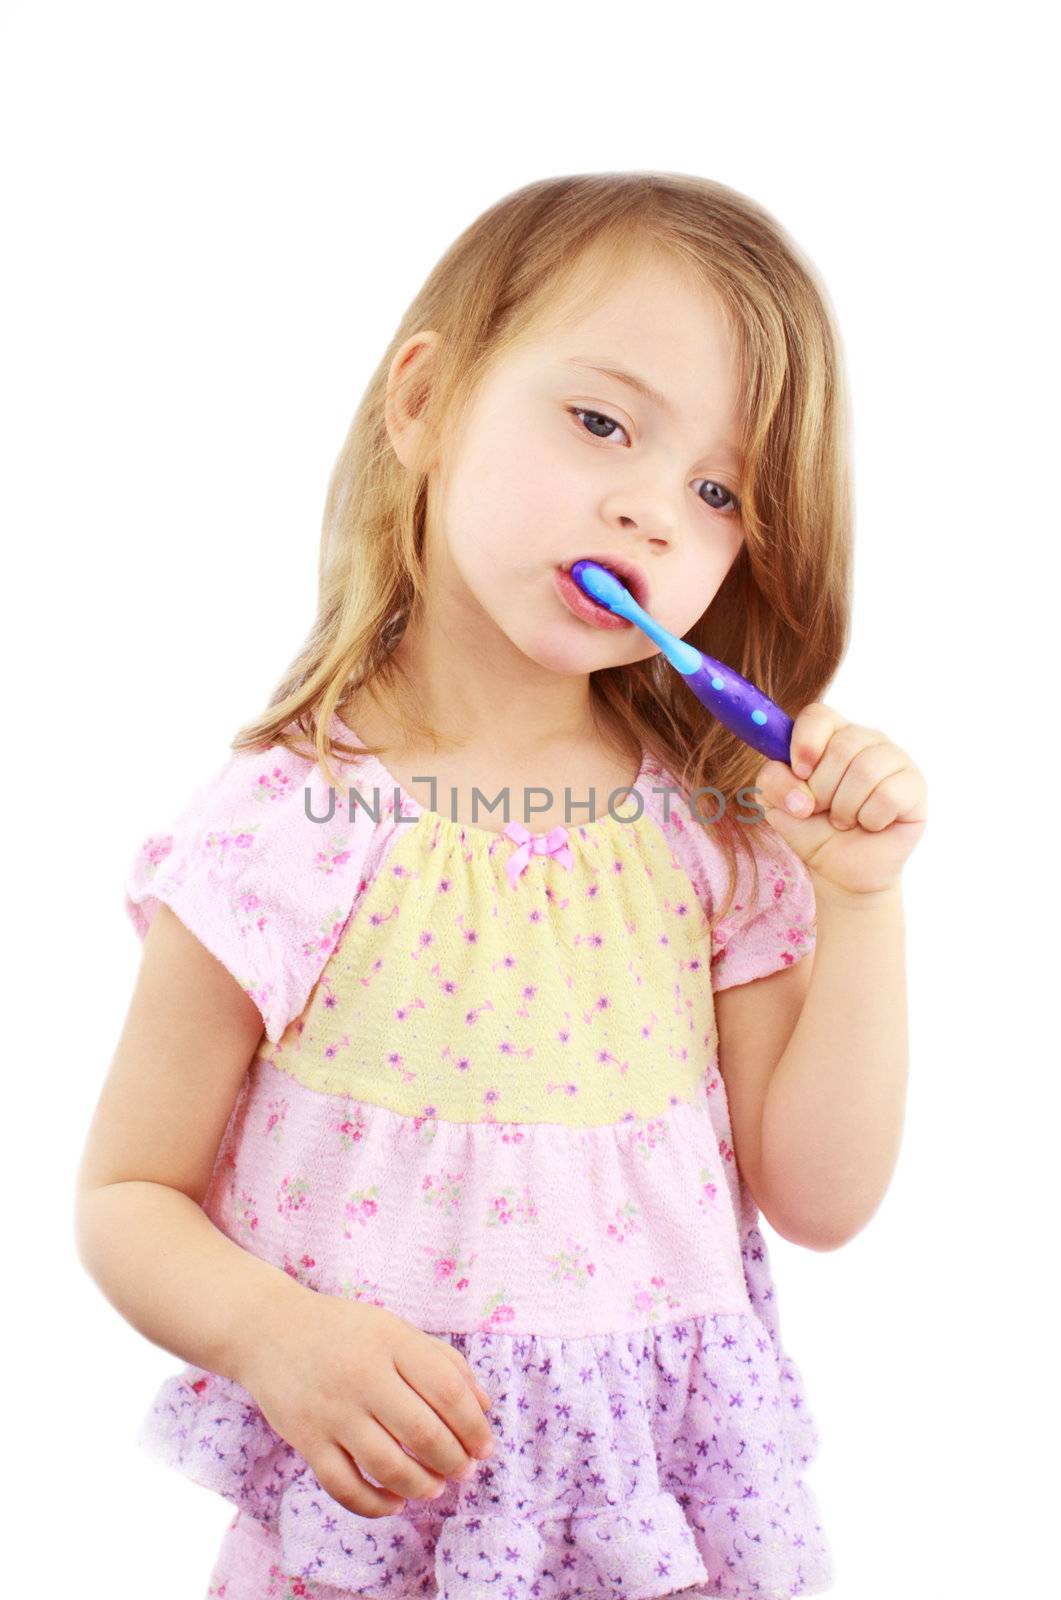 Child Brushing Teeth by StephanieFrey